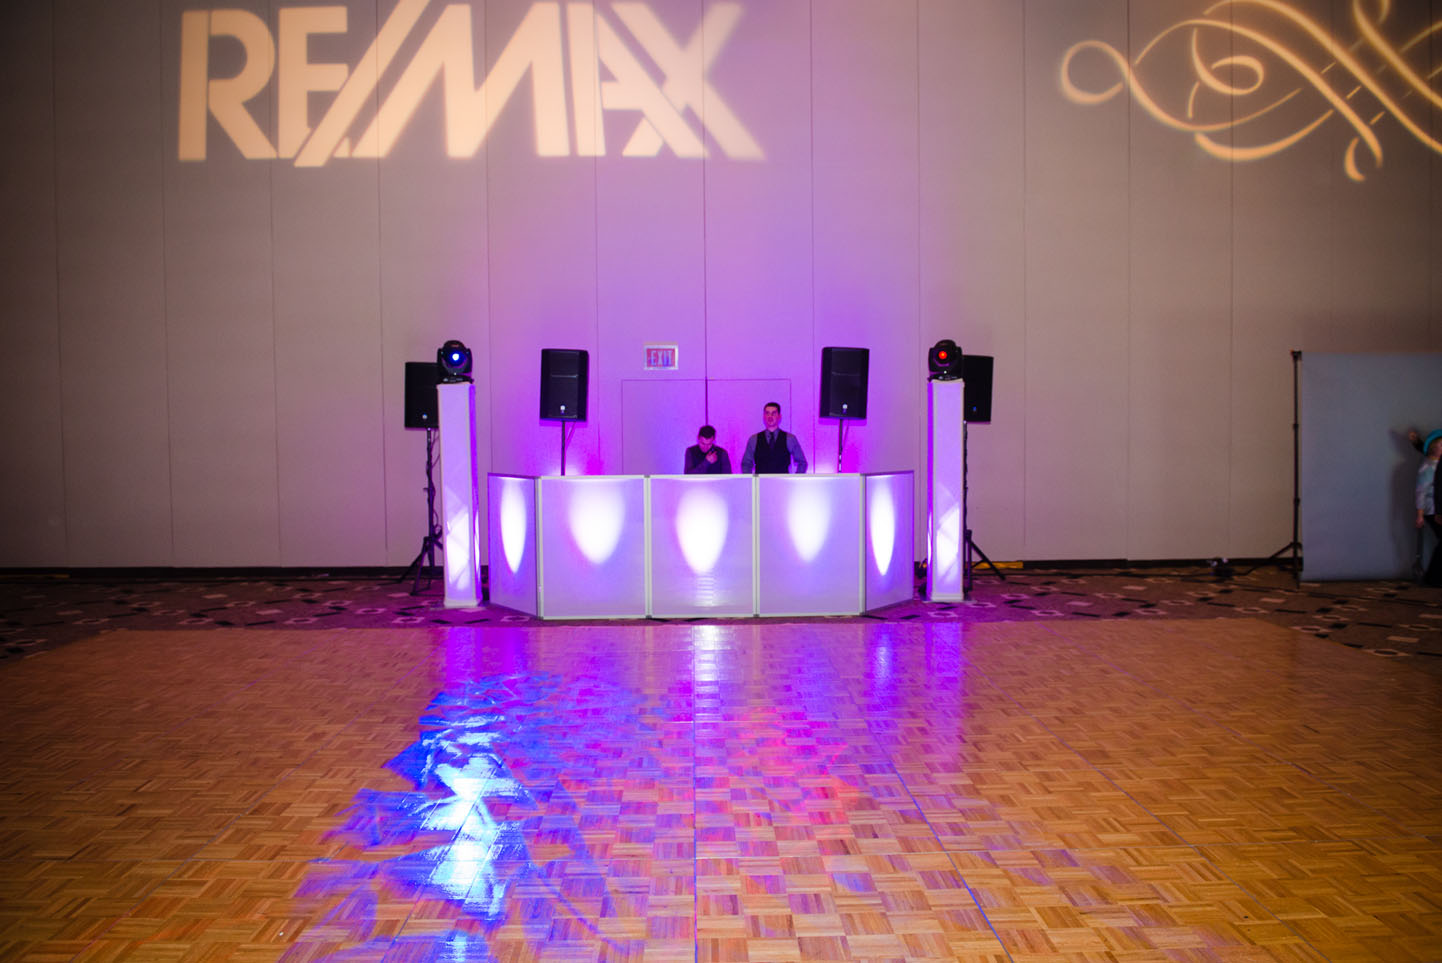 2015-12-09 ReMax Corpoarte Event - The Borgata - Atlantic City NJ - Photo Sesh - 2015-5033.jpg